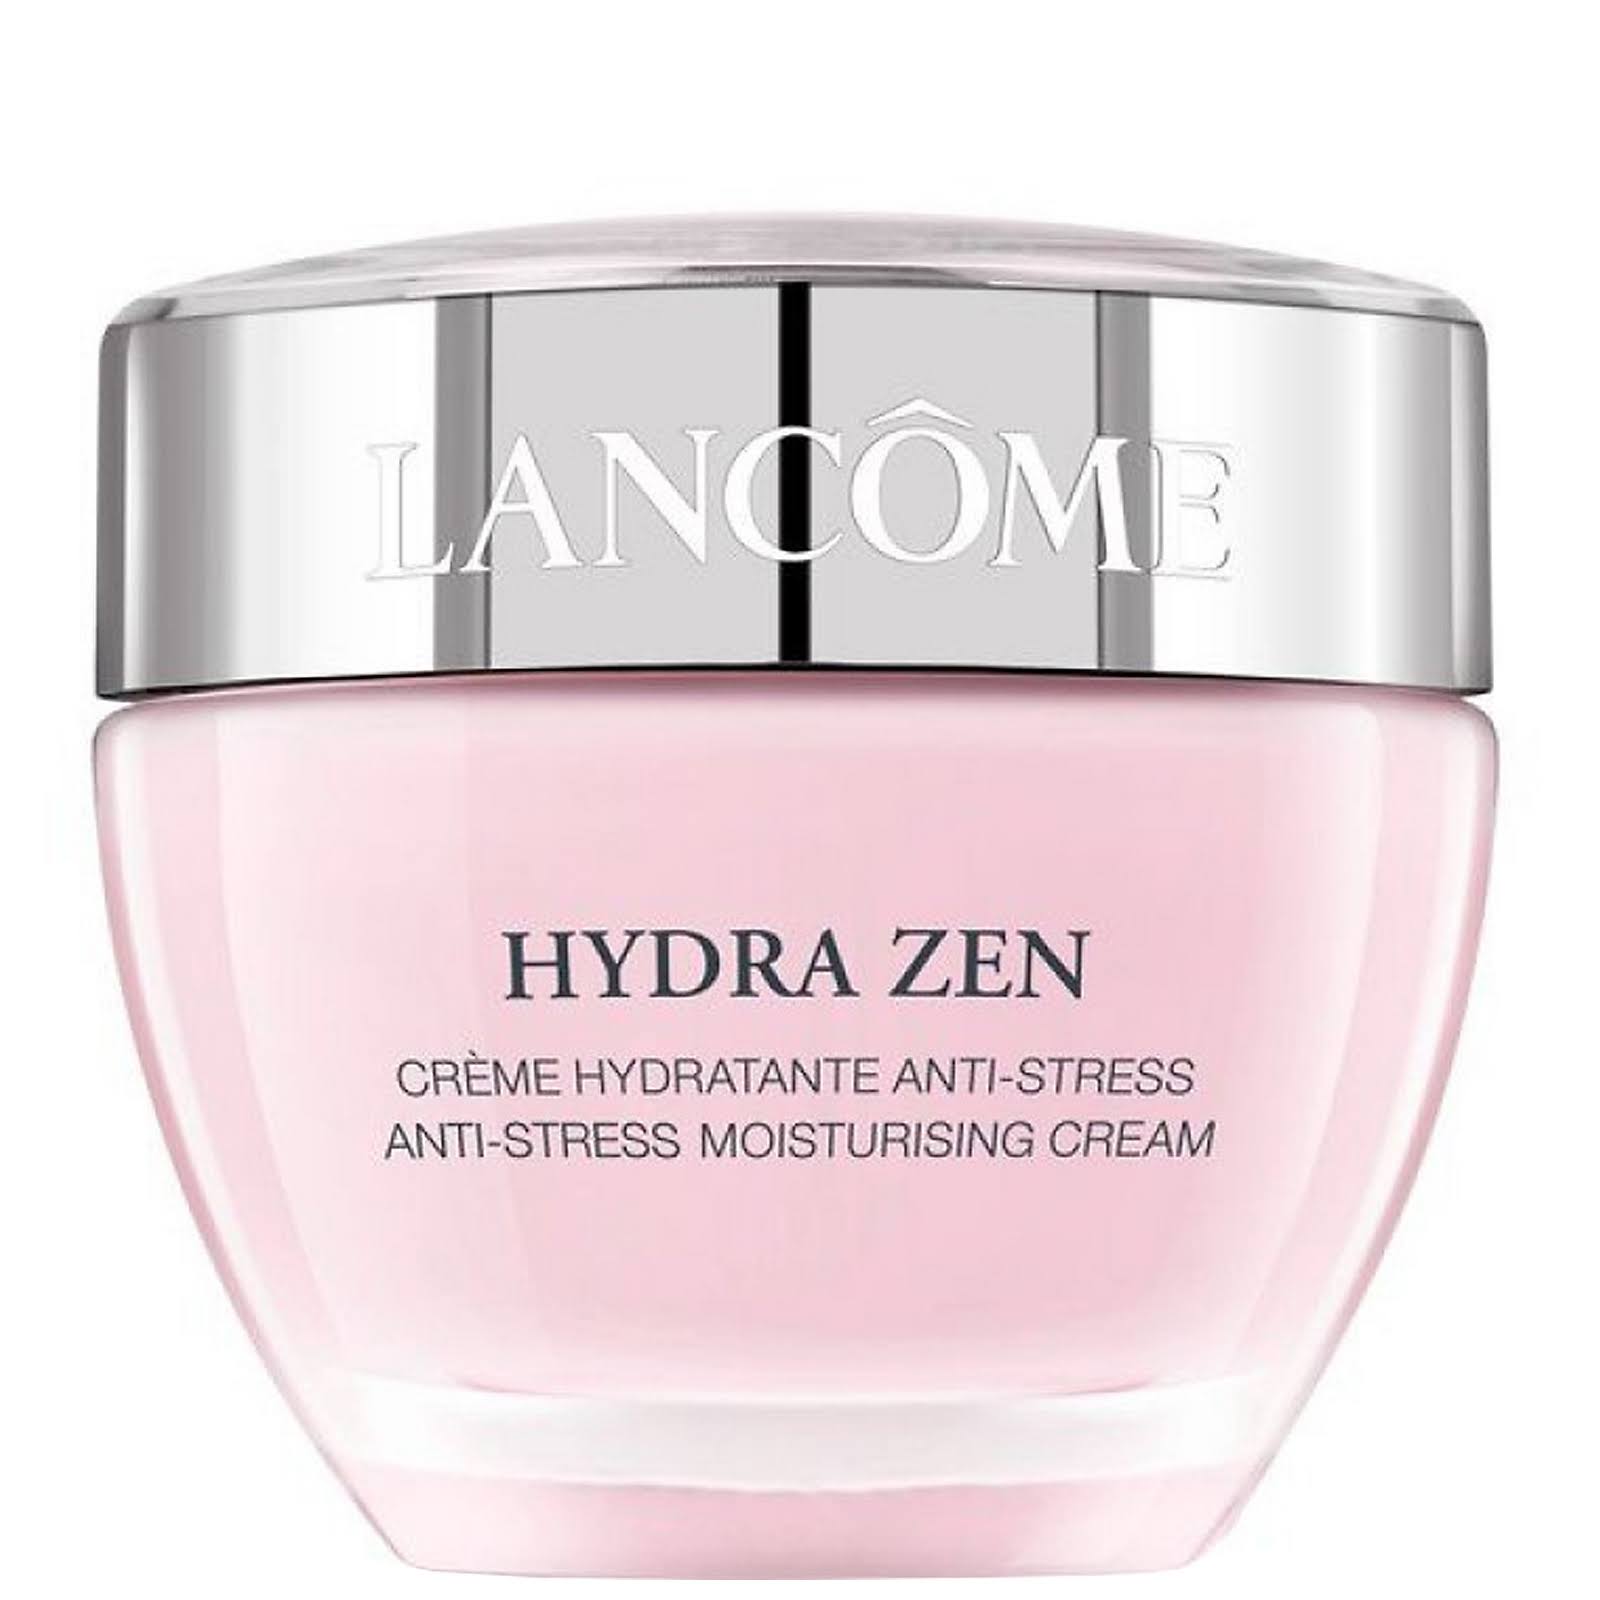 Lancome Hydra Zen Anti Stress Moisturising Cream - 75ml